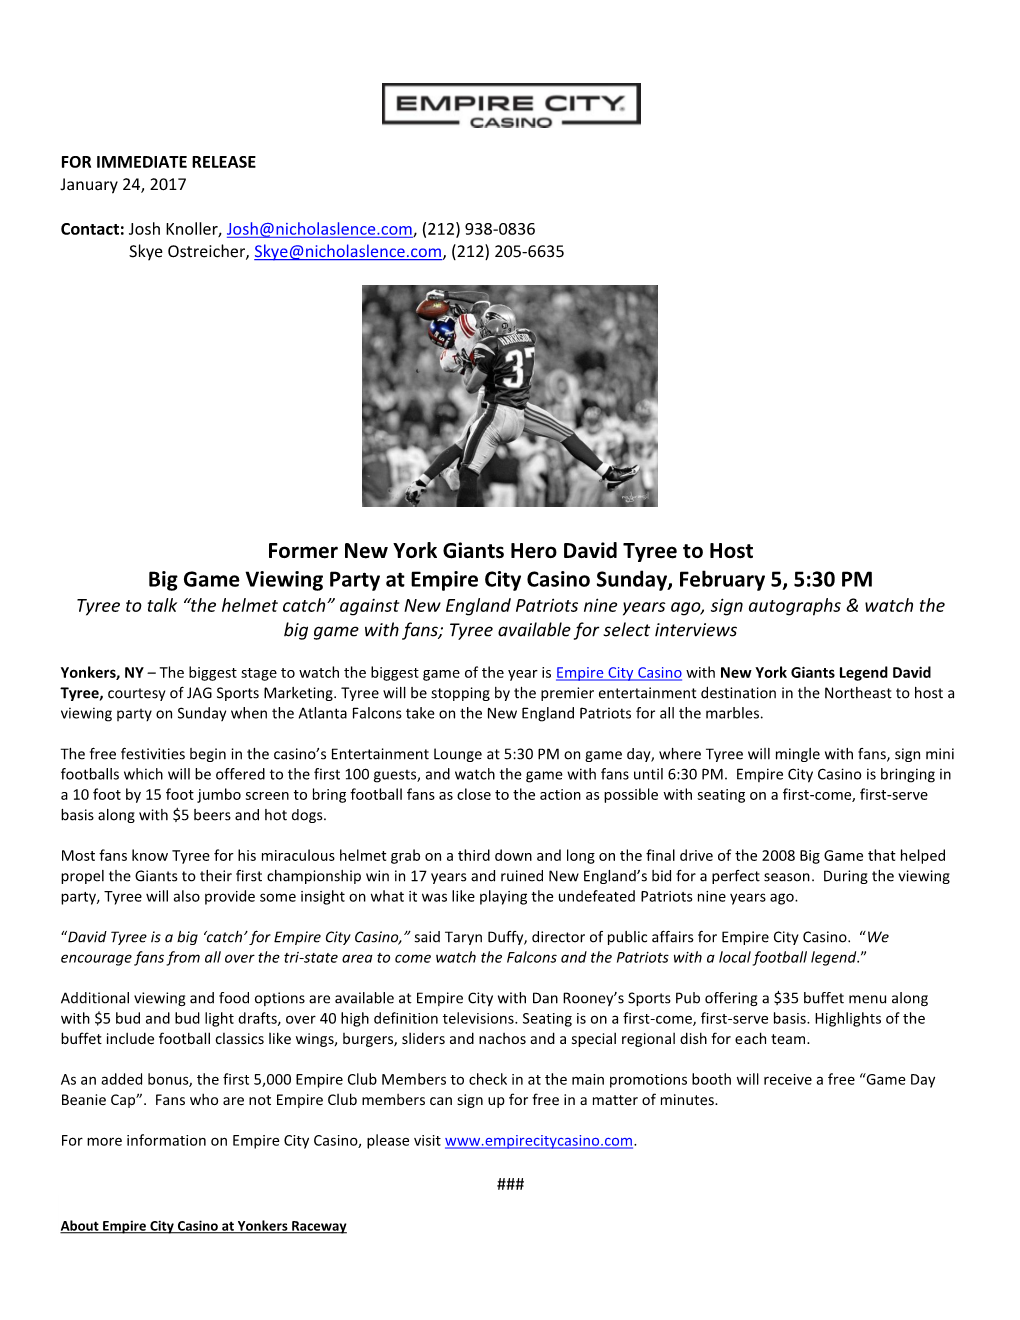 Former New York Giants Hero David Tyree to Host Big Game